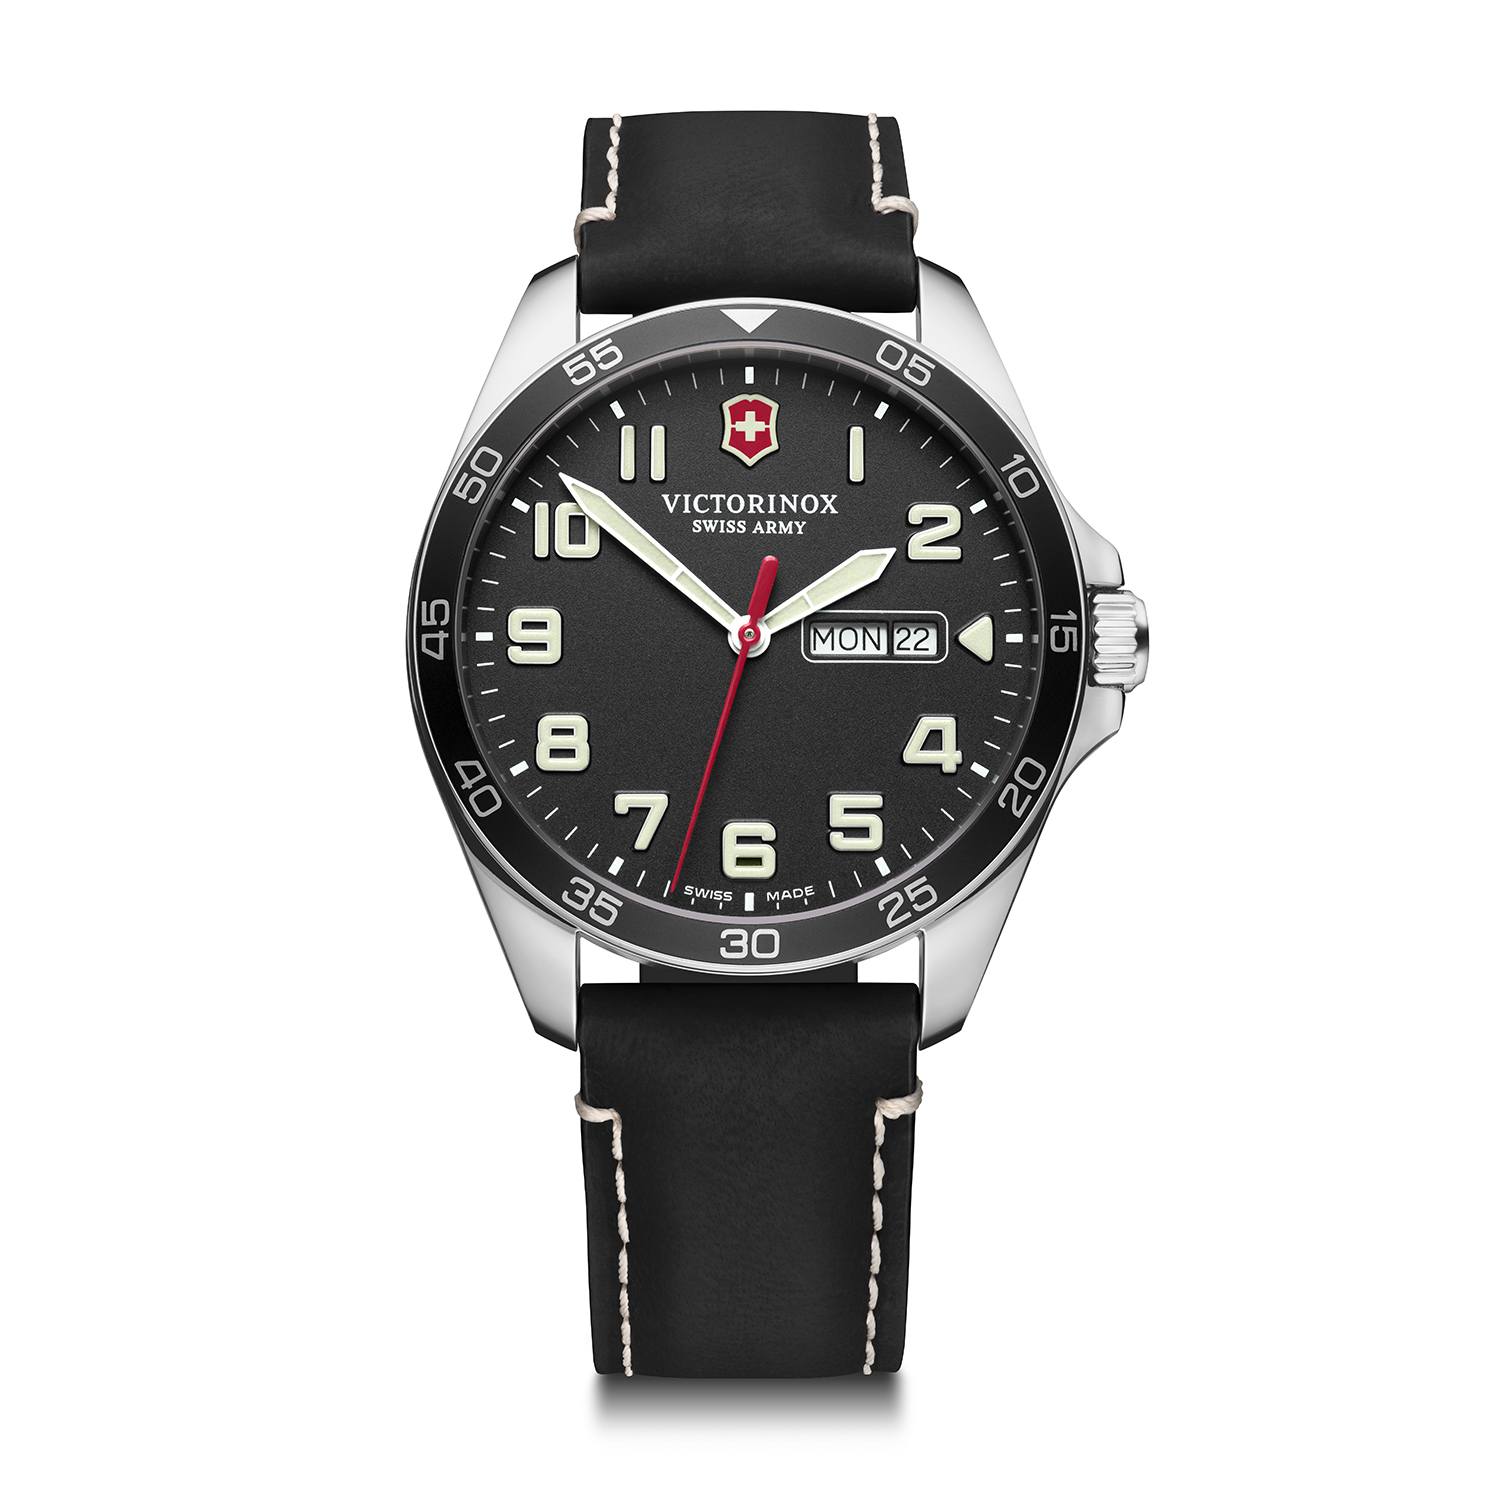 Victorinox Swiss Army Fieldforce Timepiece 0